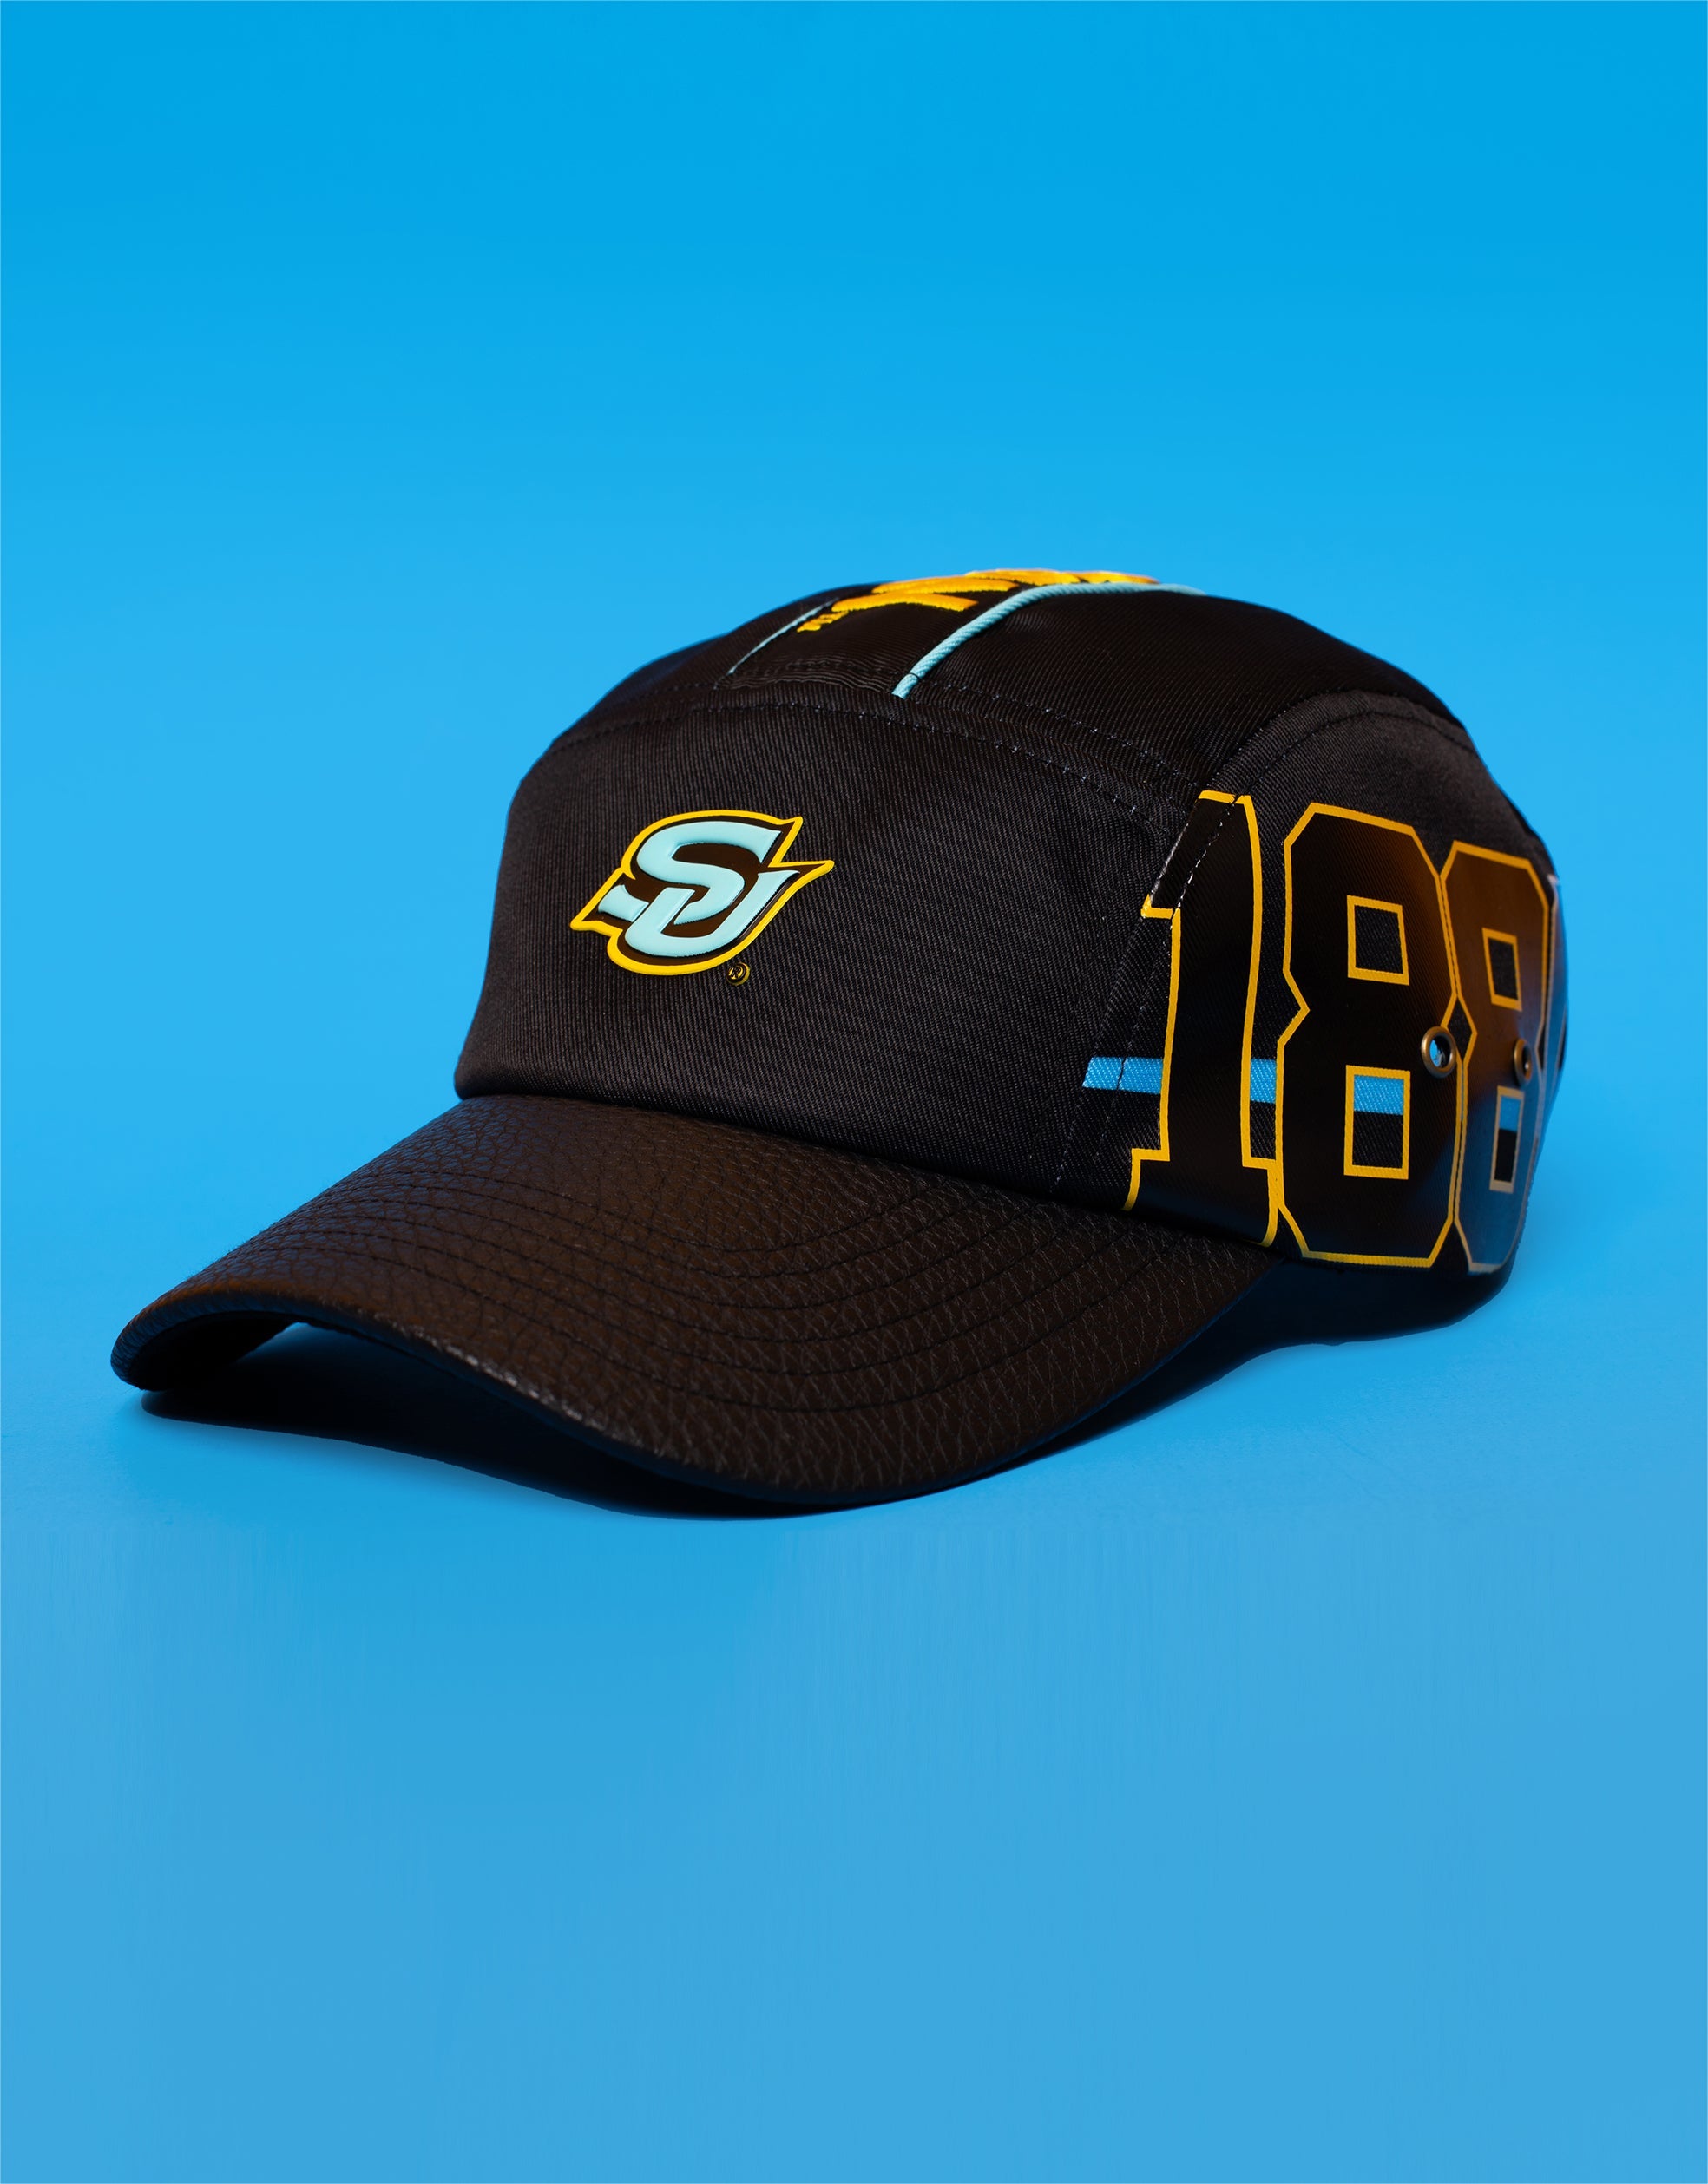 TheYard - BLACKOUT - Southern University - HBCU Hat